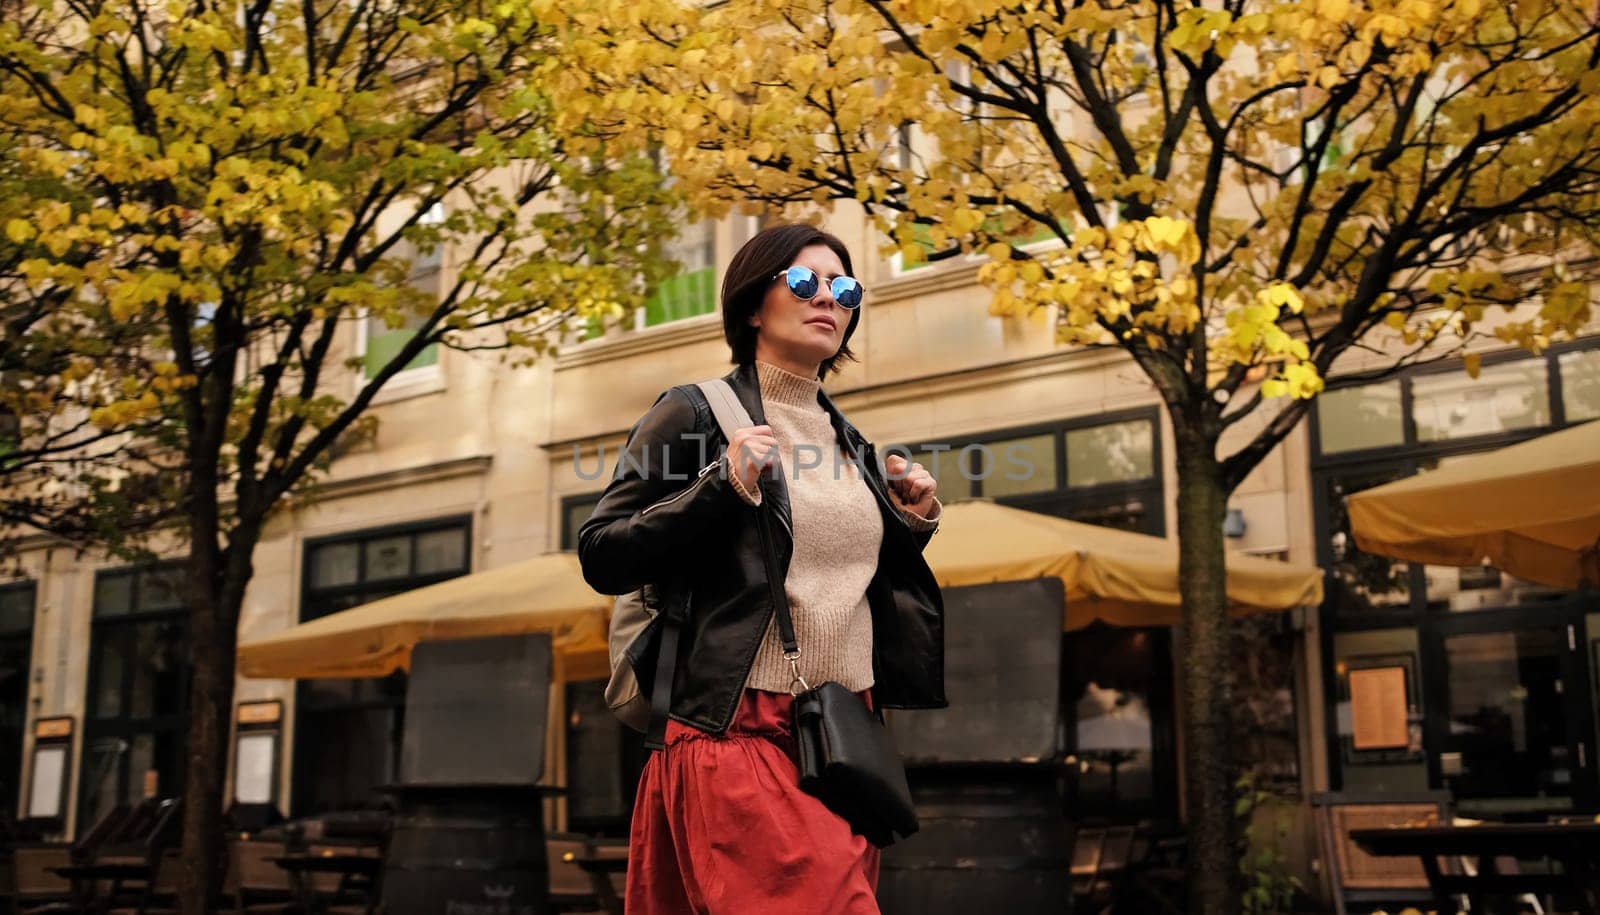 Stylish Woman With Sunglasses Strolls Down City Street by GekaSkr